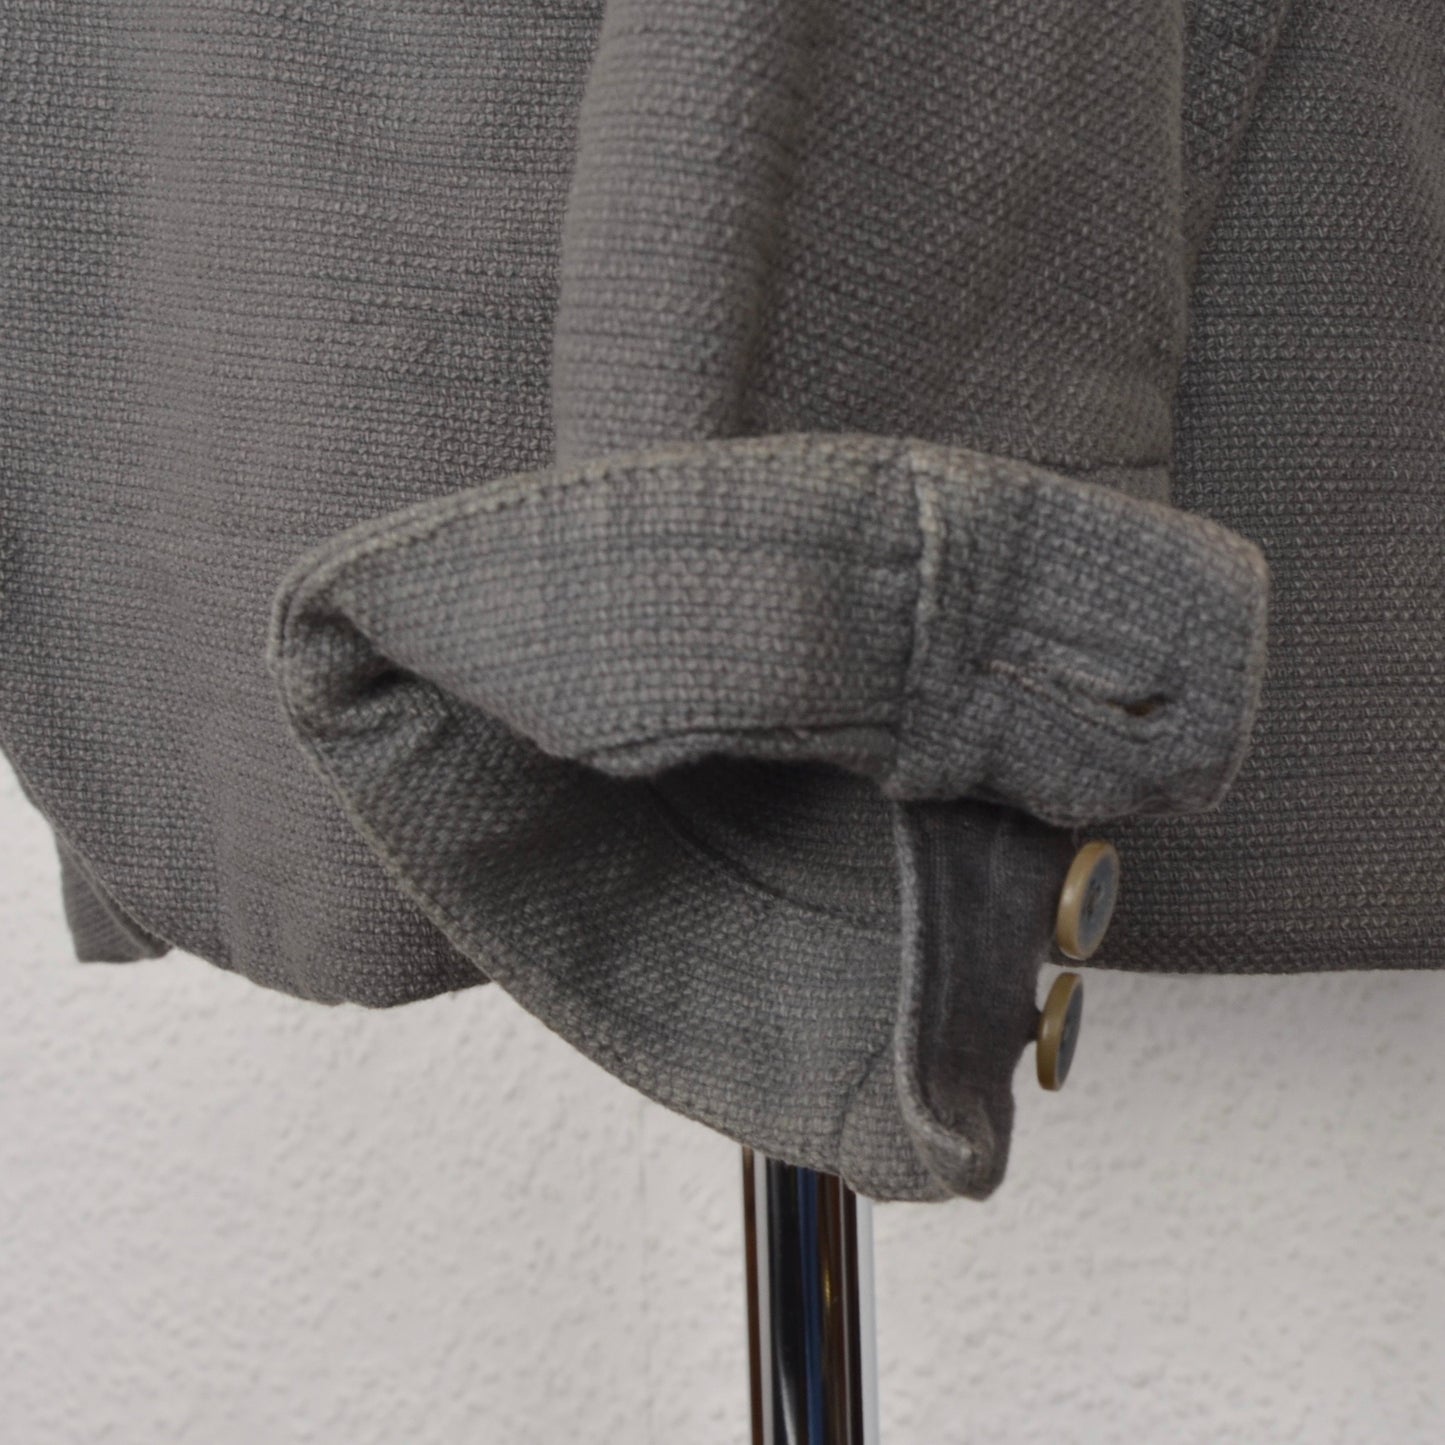 Transit Uomo Cotton Jacket Size XS - Grey